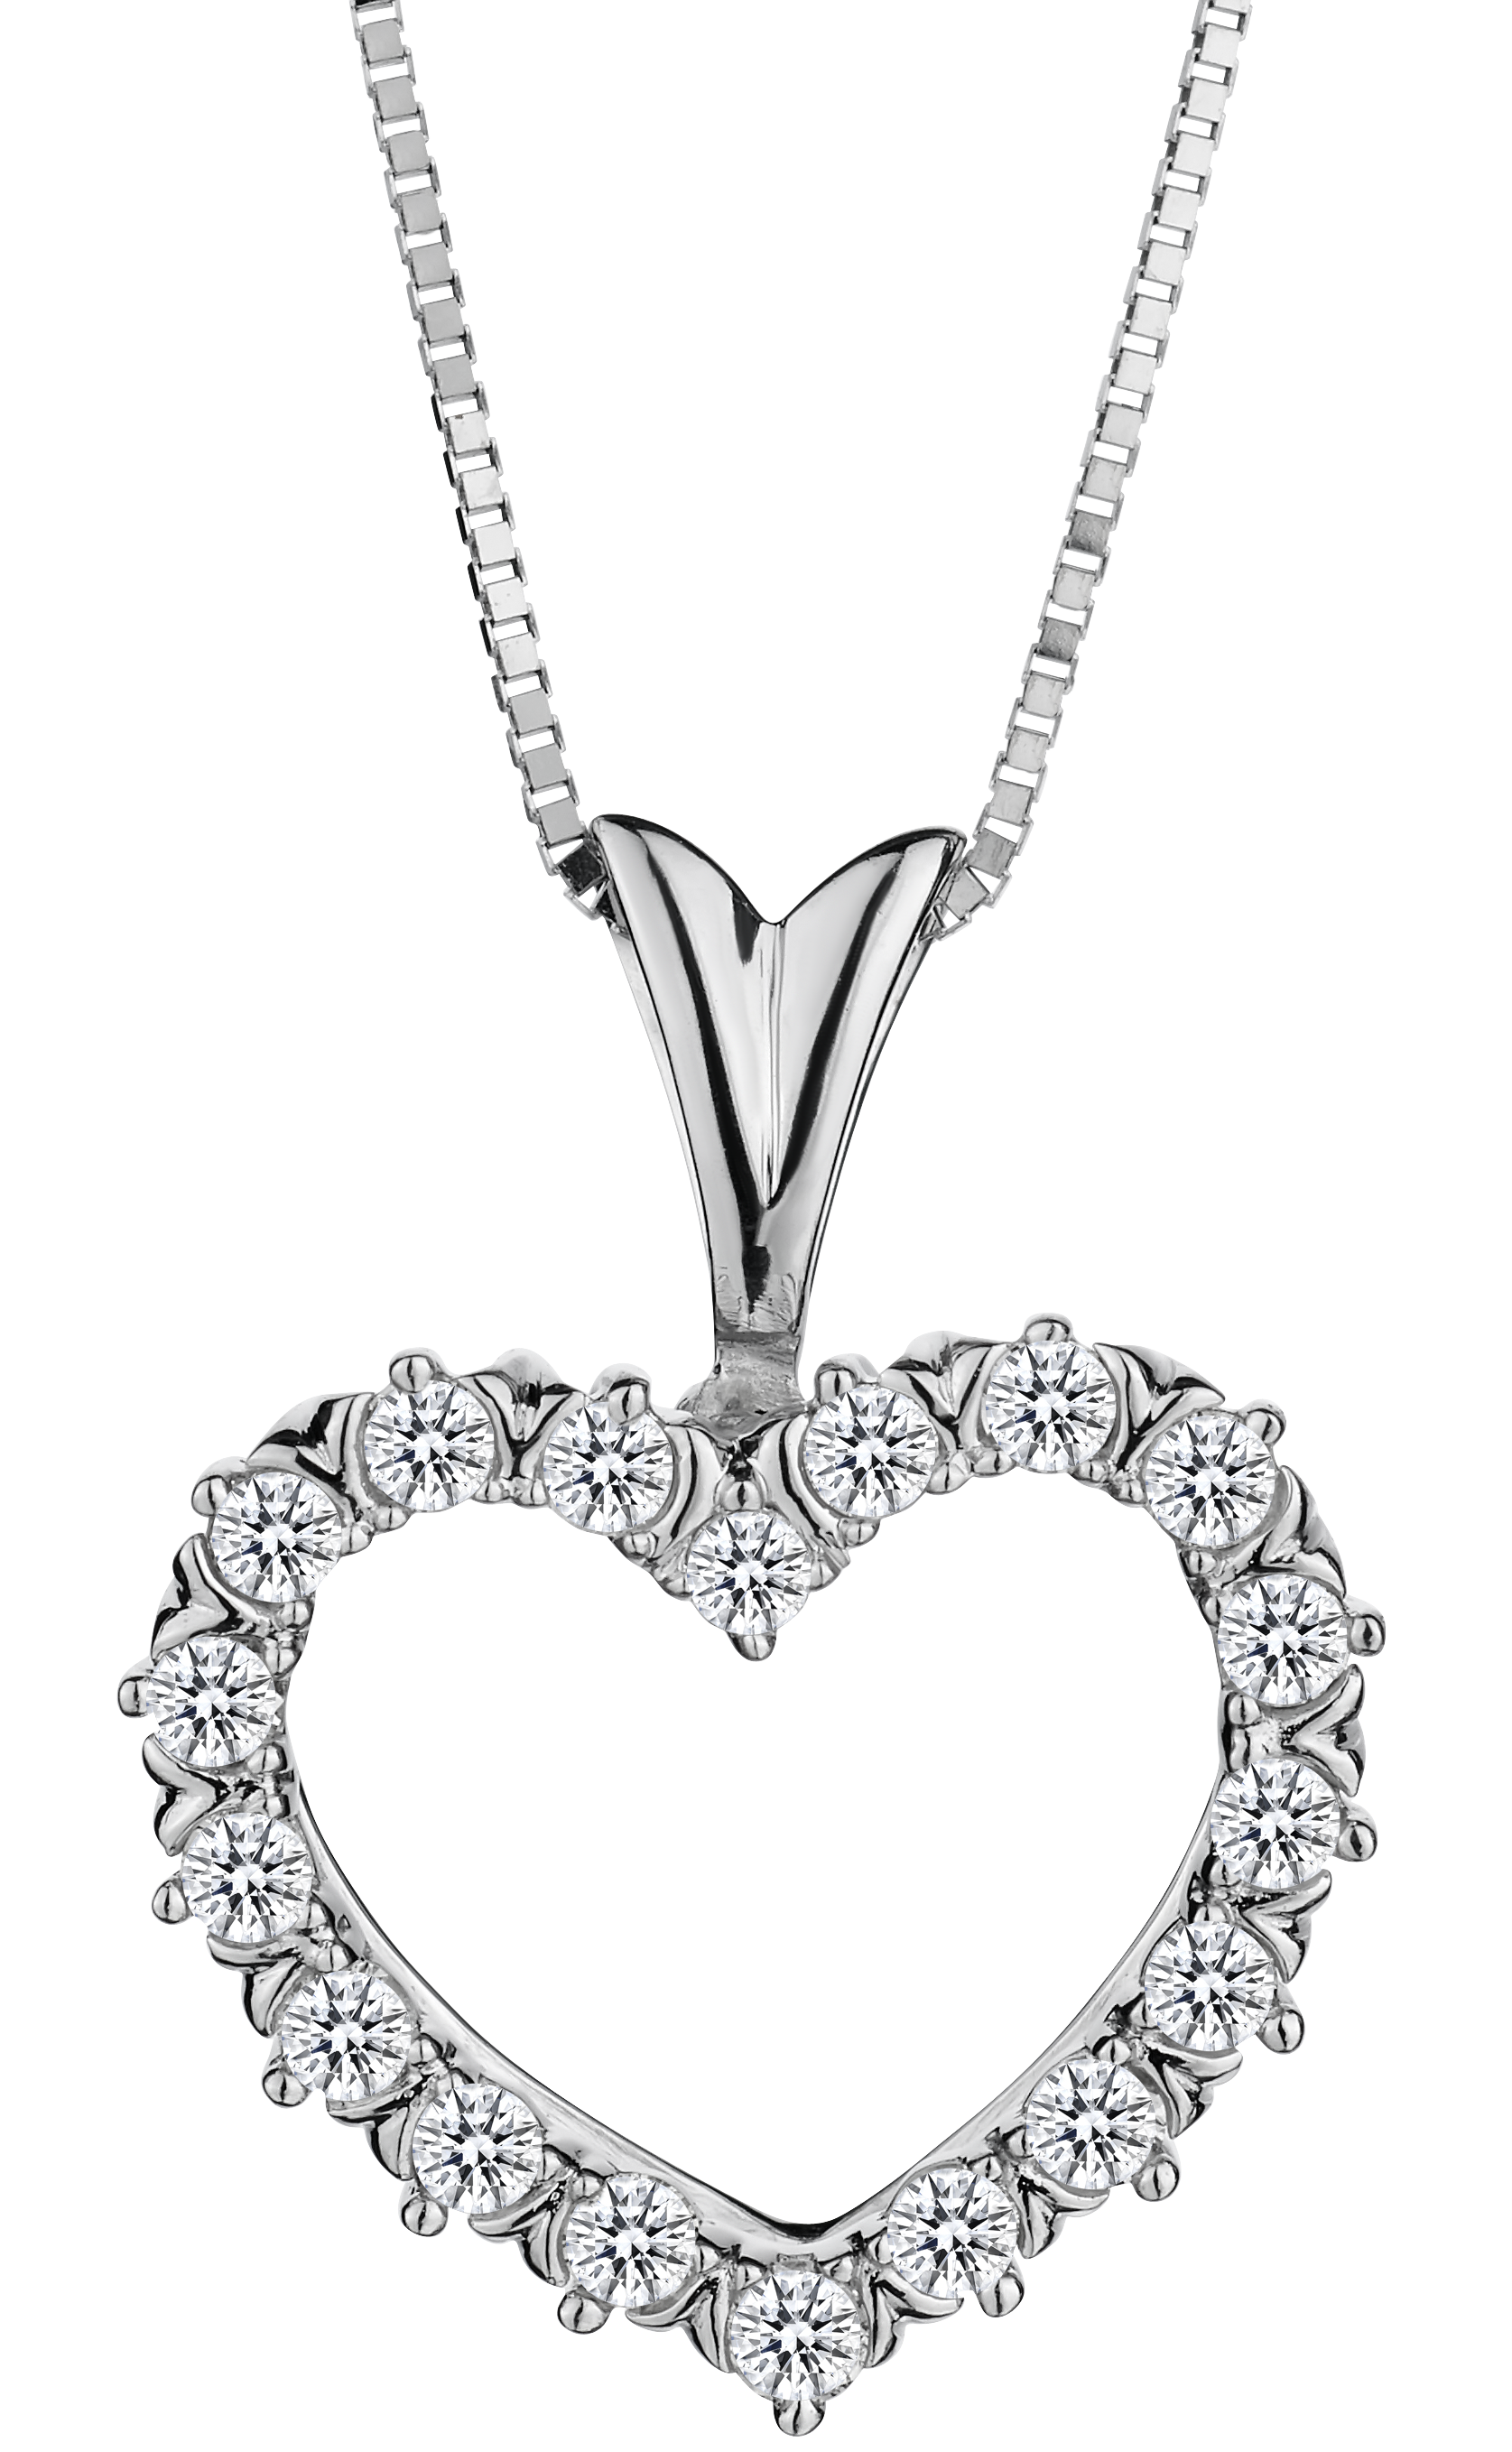 .25 Carat of Diamonds Heart Pendant, 10kt White Gold.....................NOW